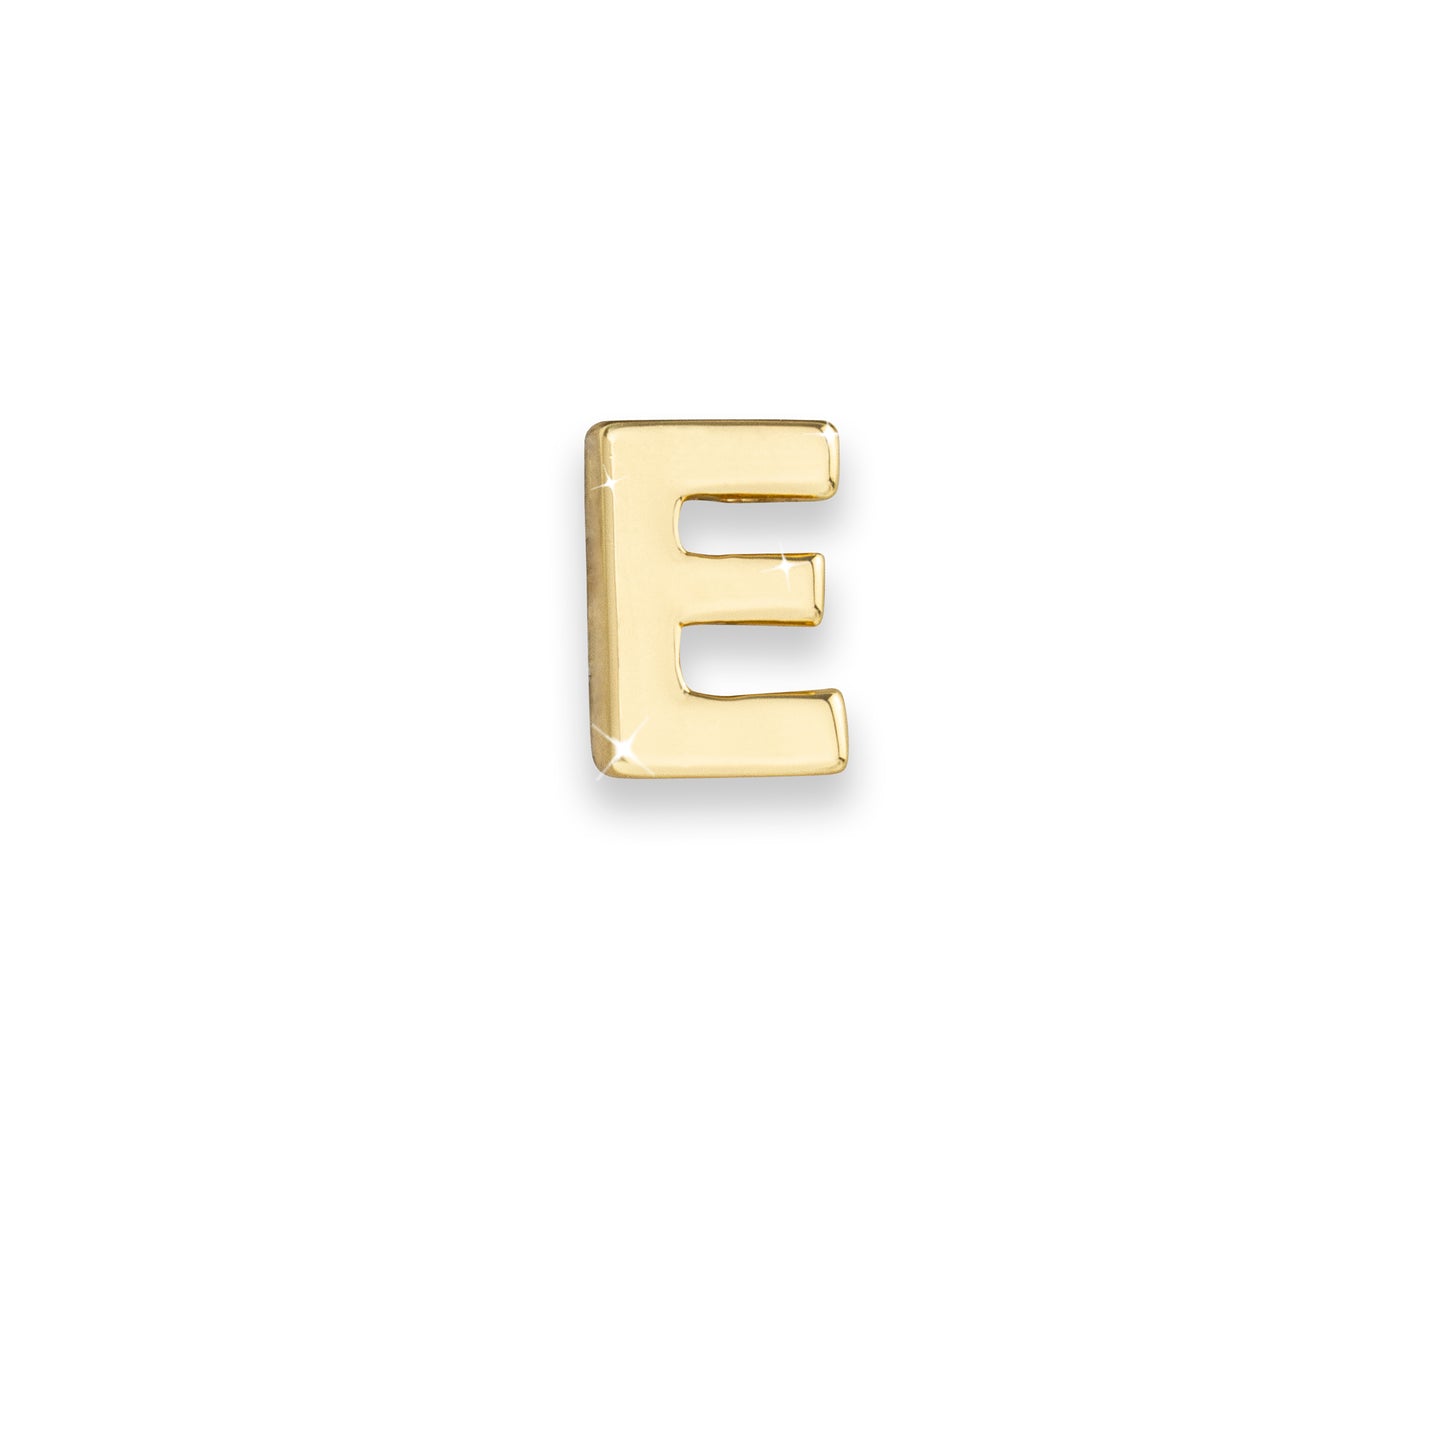 Gold letter E monogram charm for necklaces & bracelets